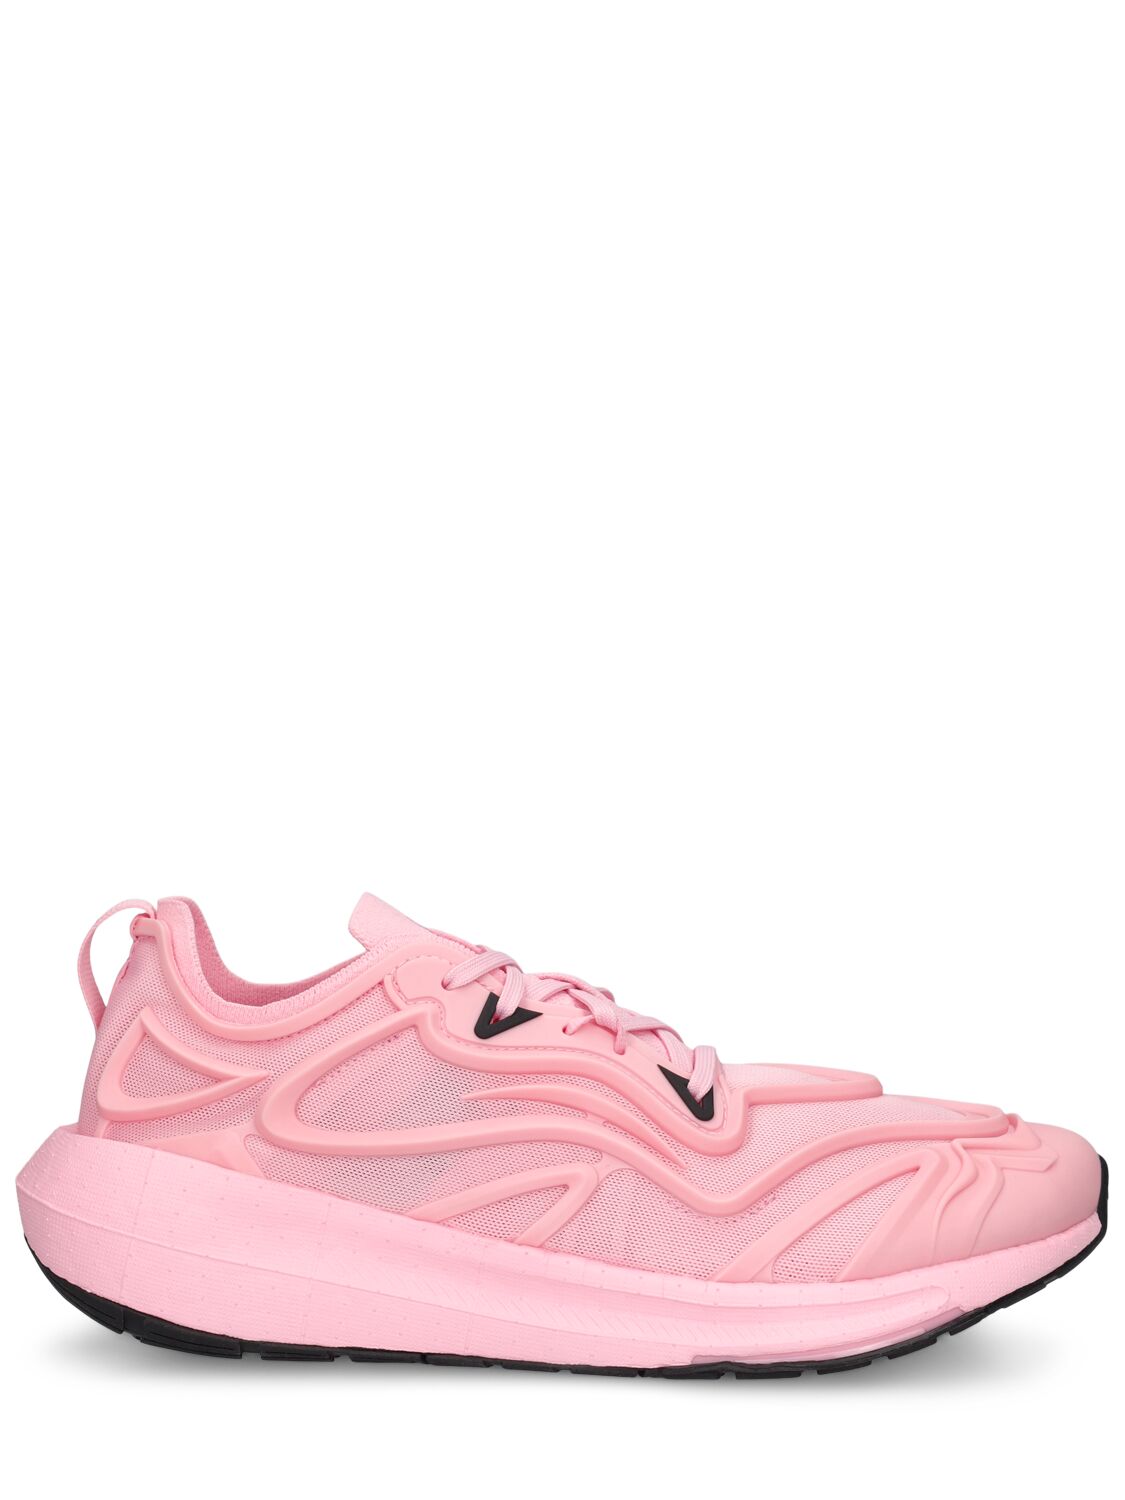 Adidas By Stella Mccartney Asmc Ultraboost Speed运动鞋 In Pink